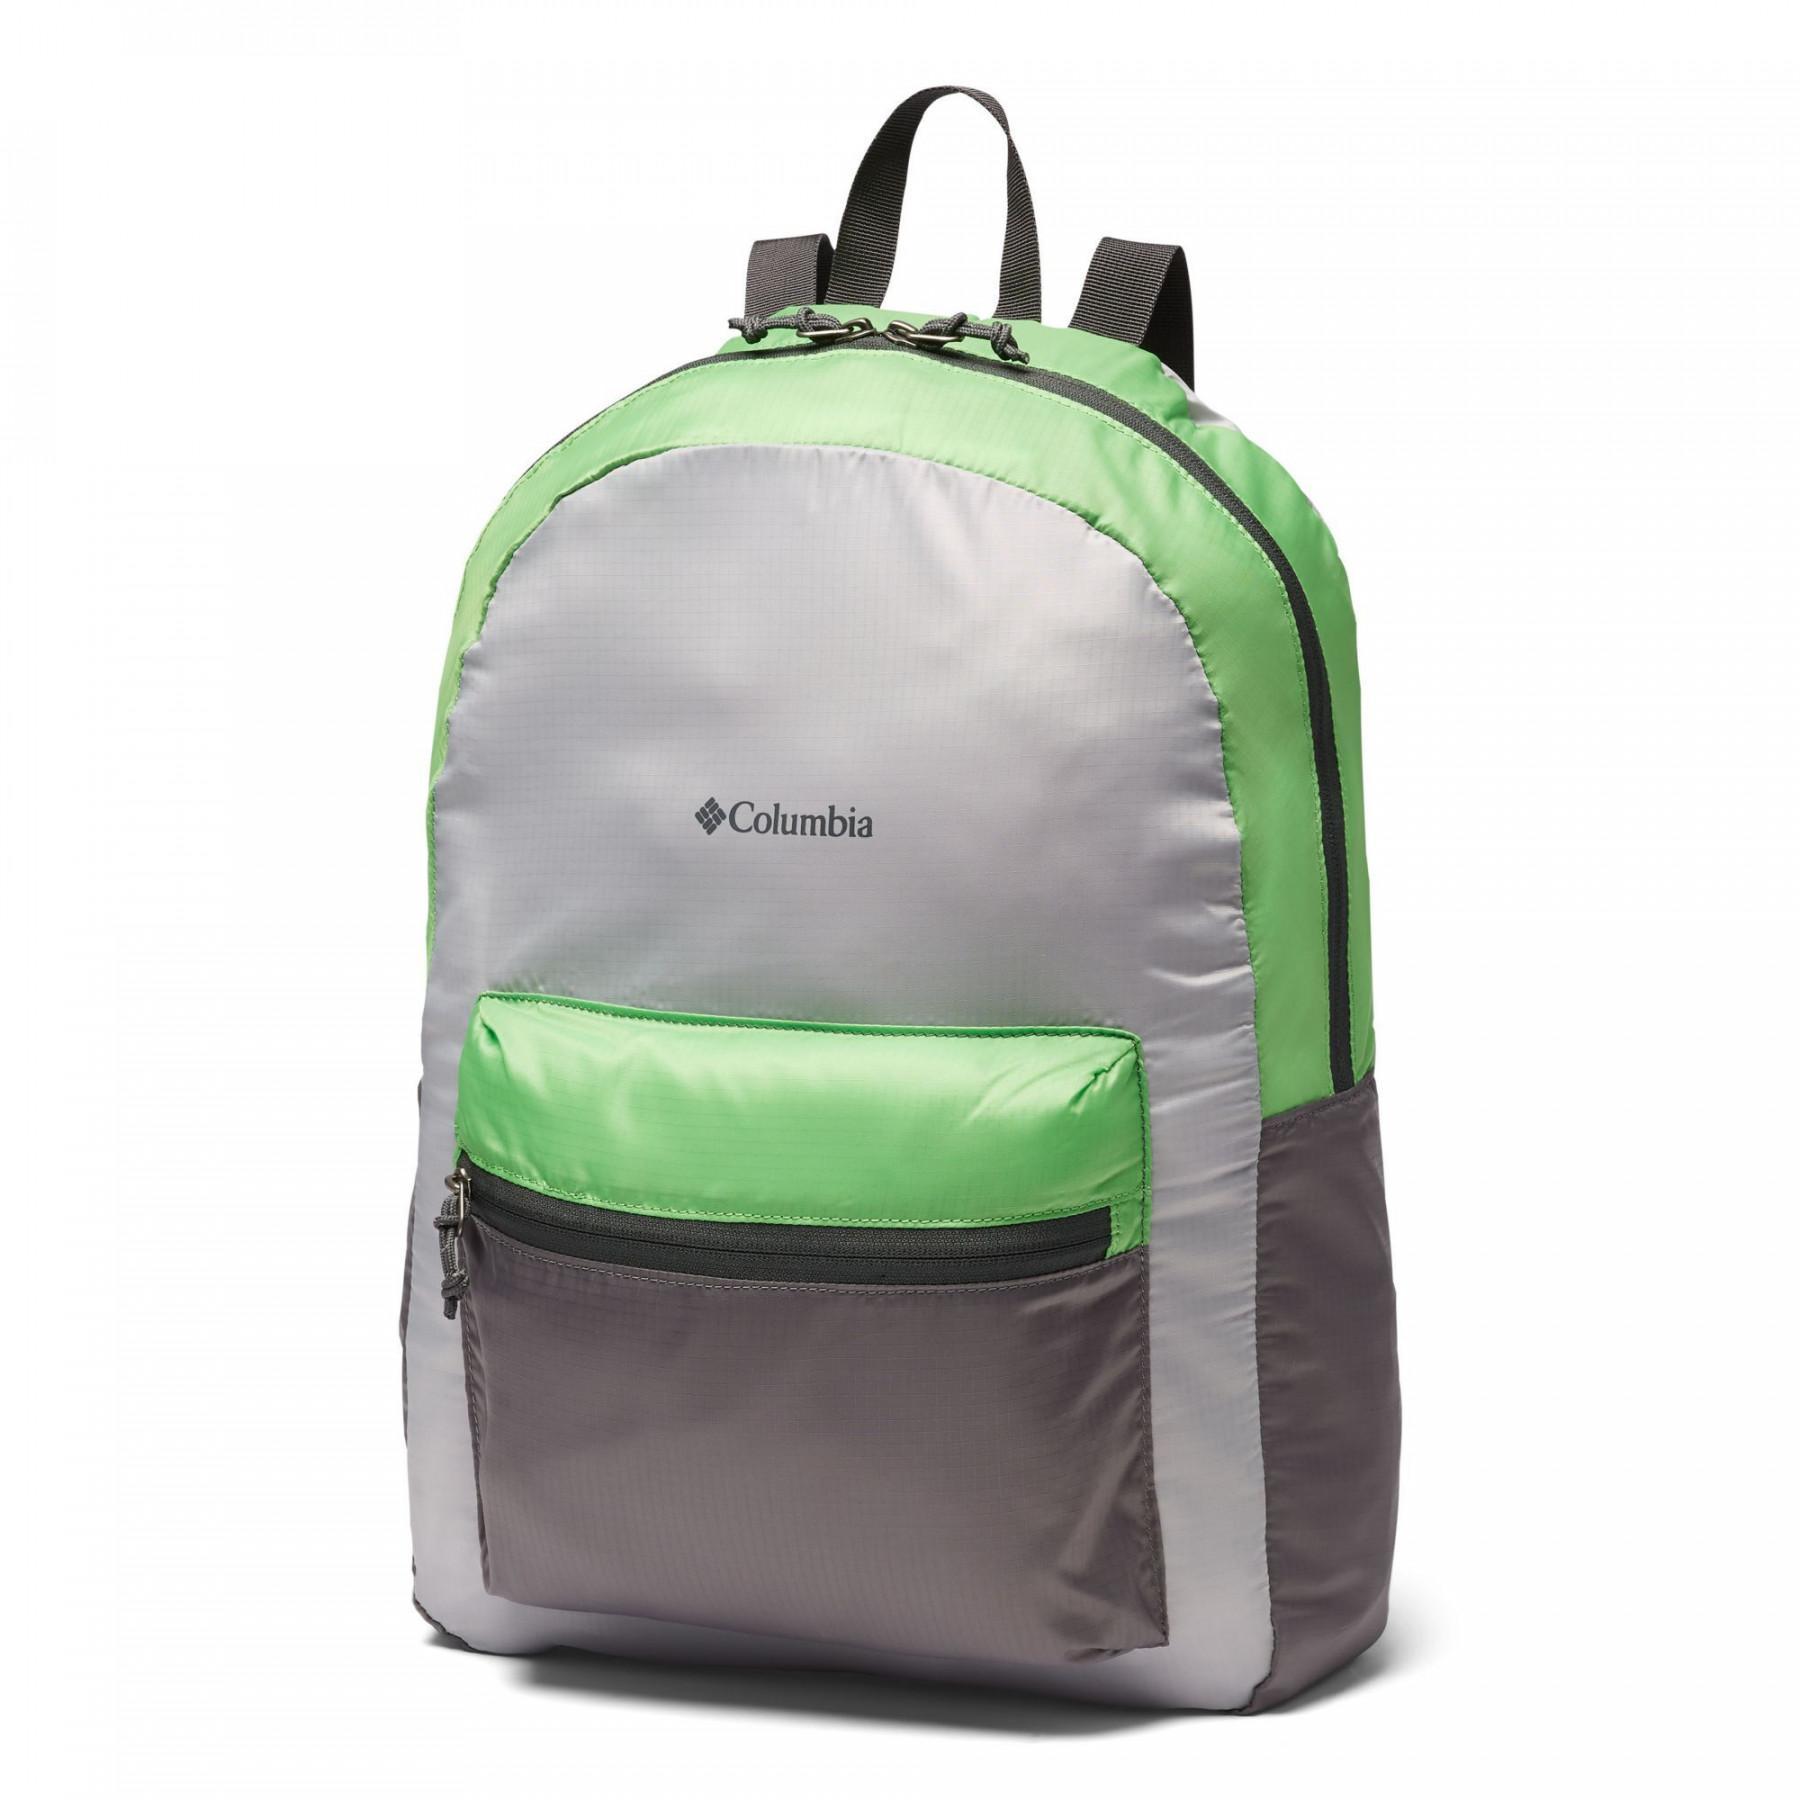 Backpack Columbia 21L